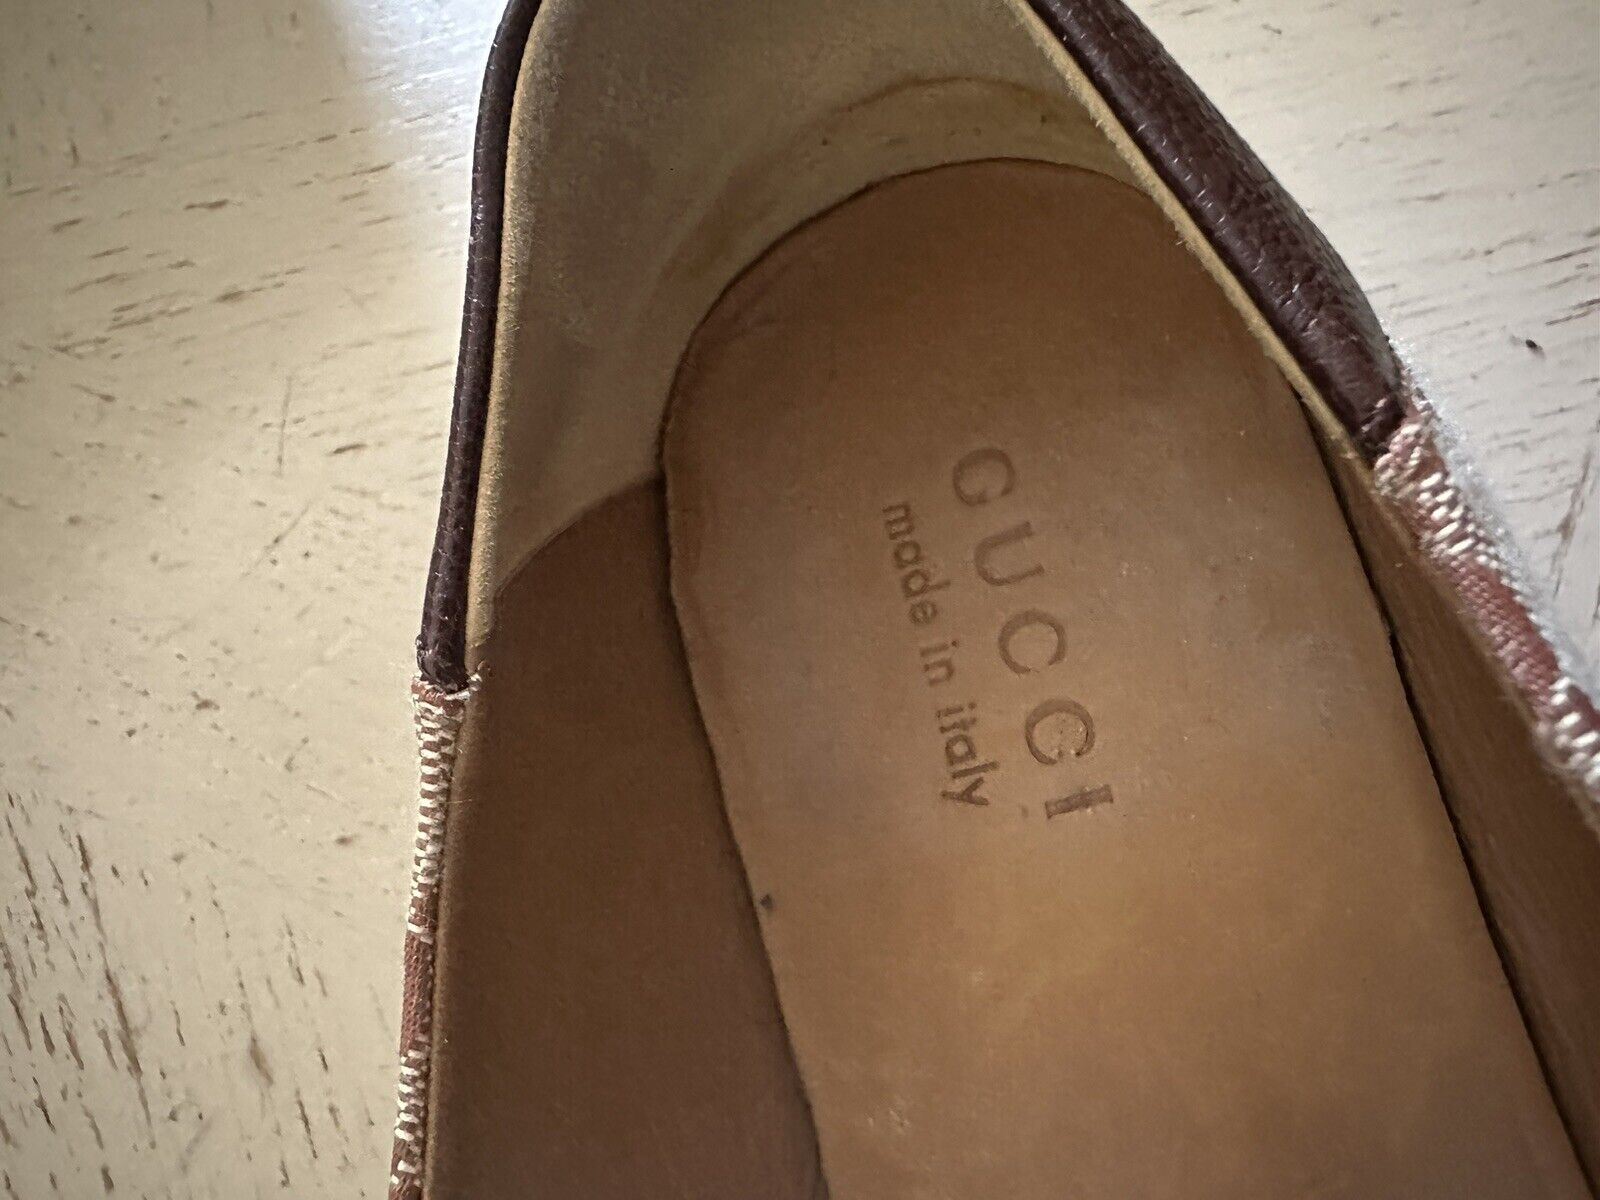 Gucci Herren-Loafer-Schuhe, Beige, 10 US (9 UK), 546223, Italien